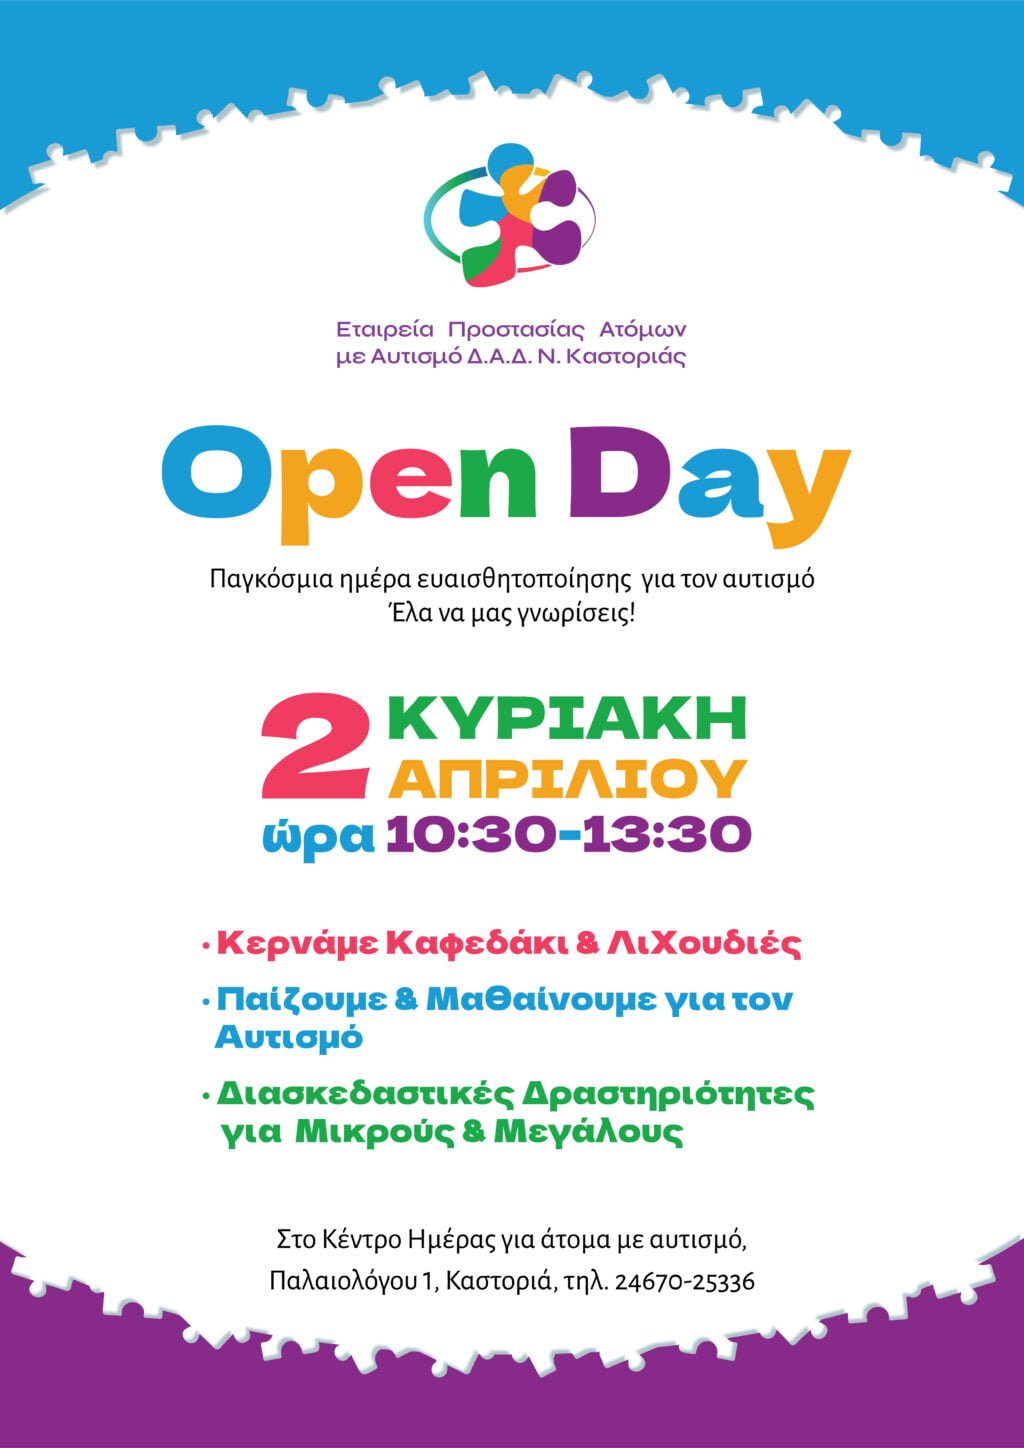 Open Day | Έλα να μας γνωρίσεις!